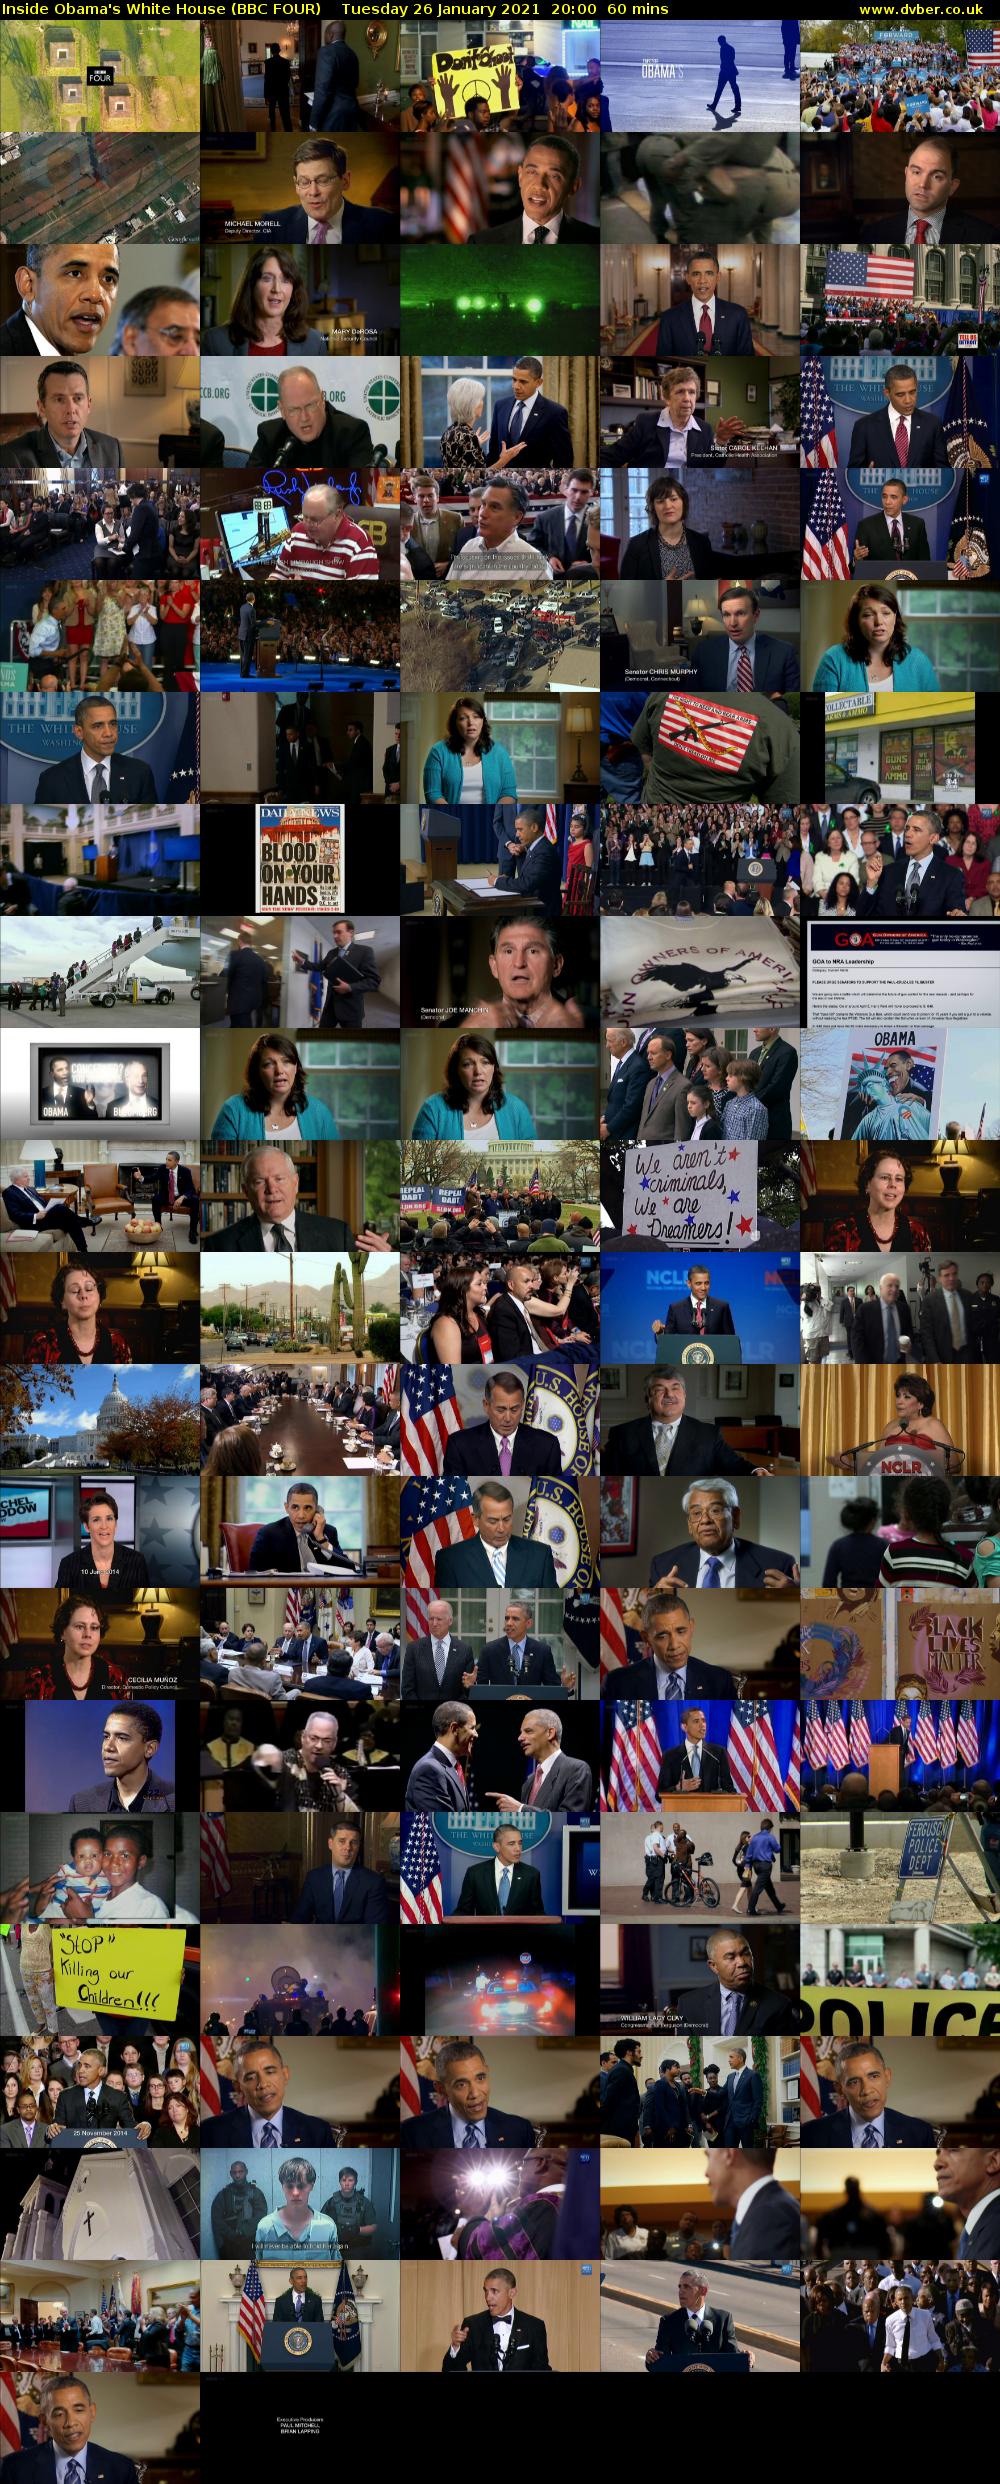 Inside Obama's White House (BBC FOUR) Tuesday 26 January 2021 20:00 - 21:00